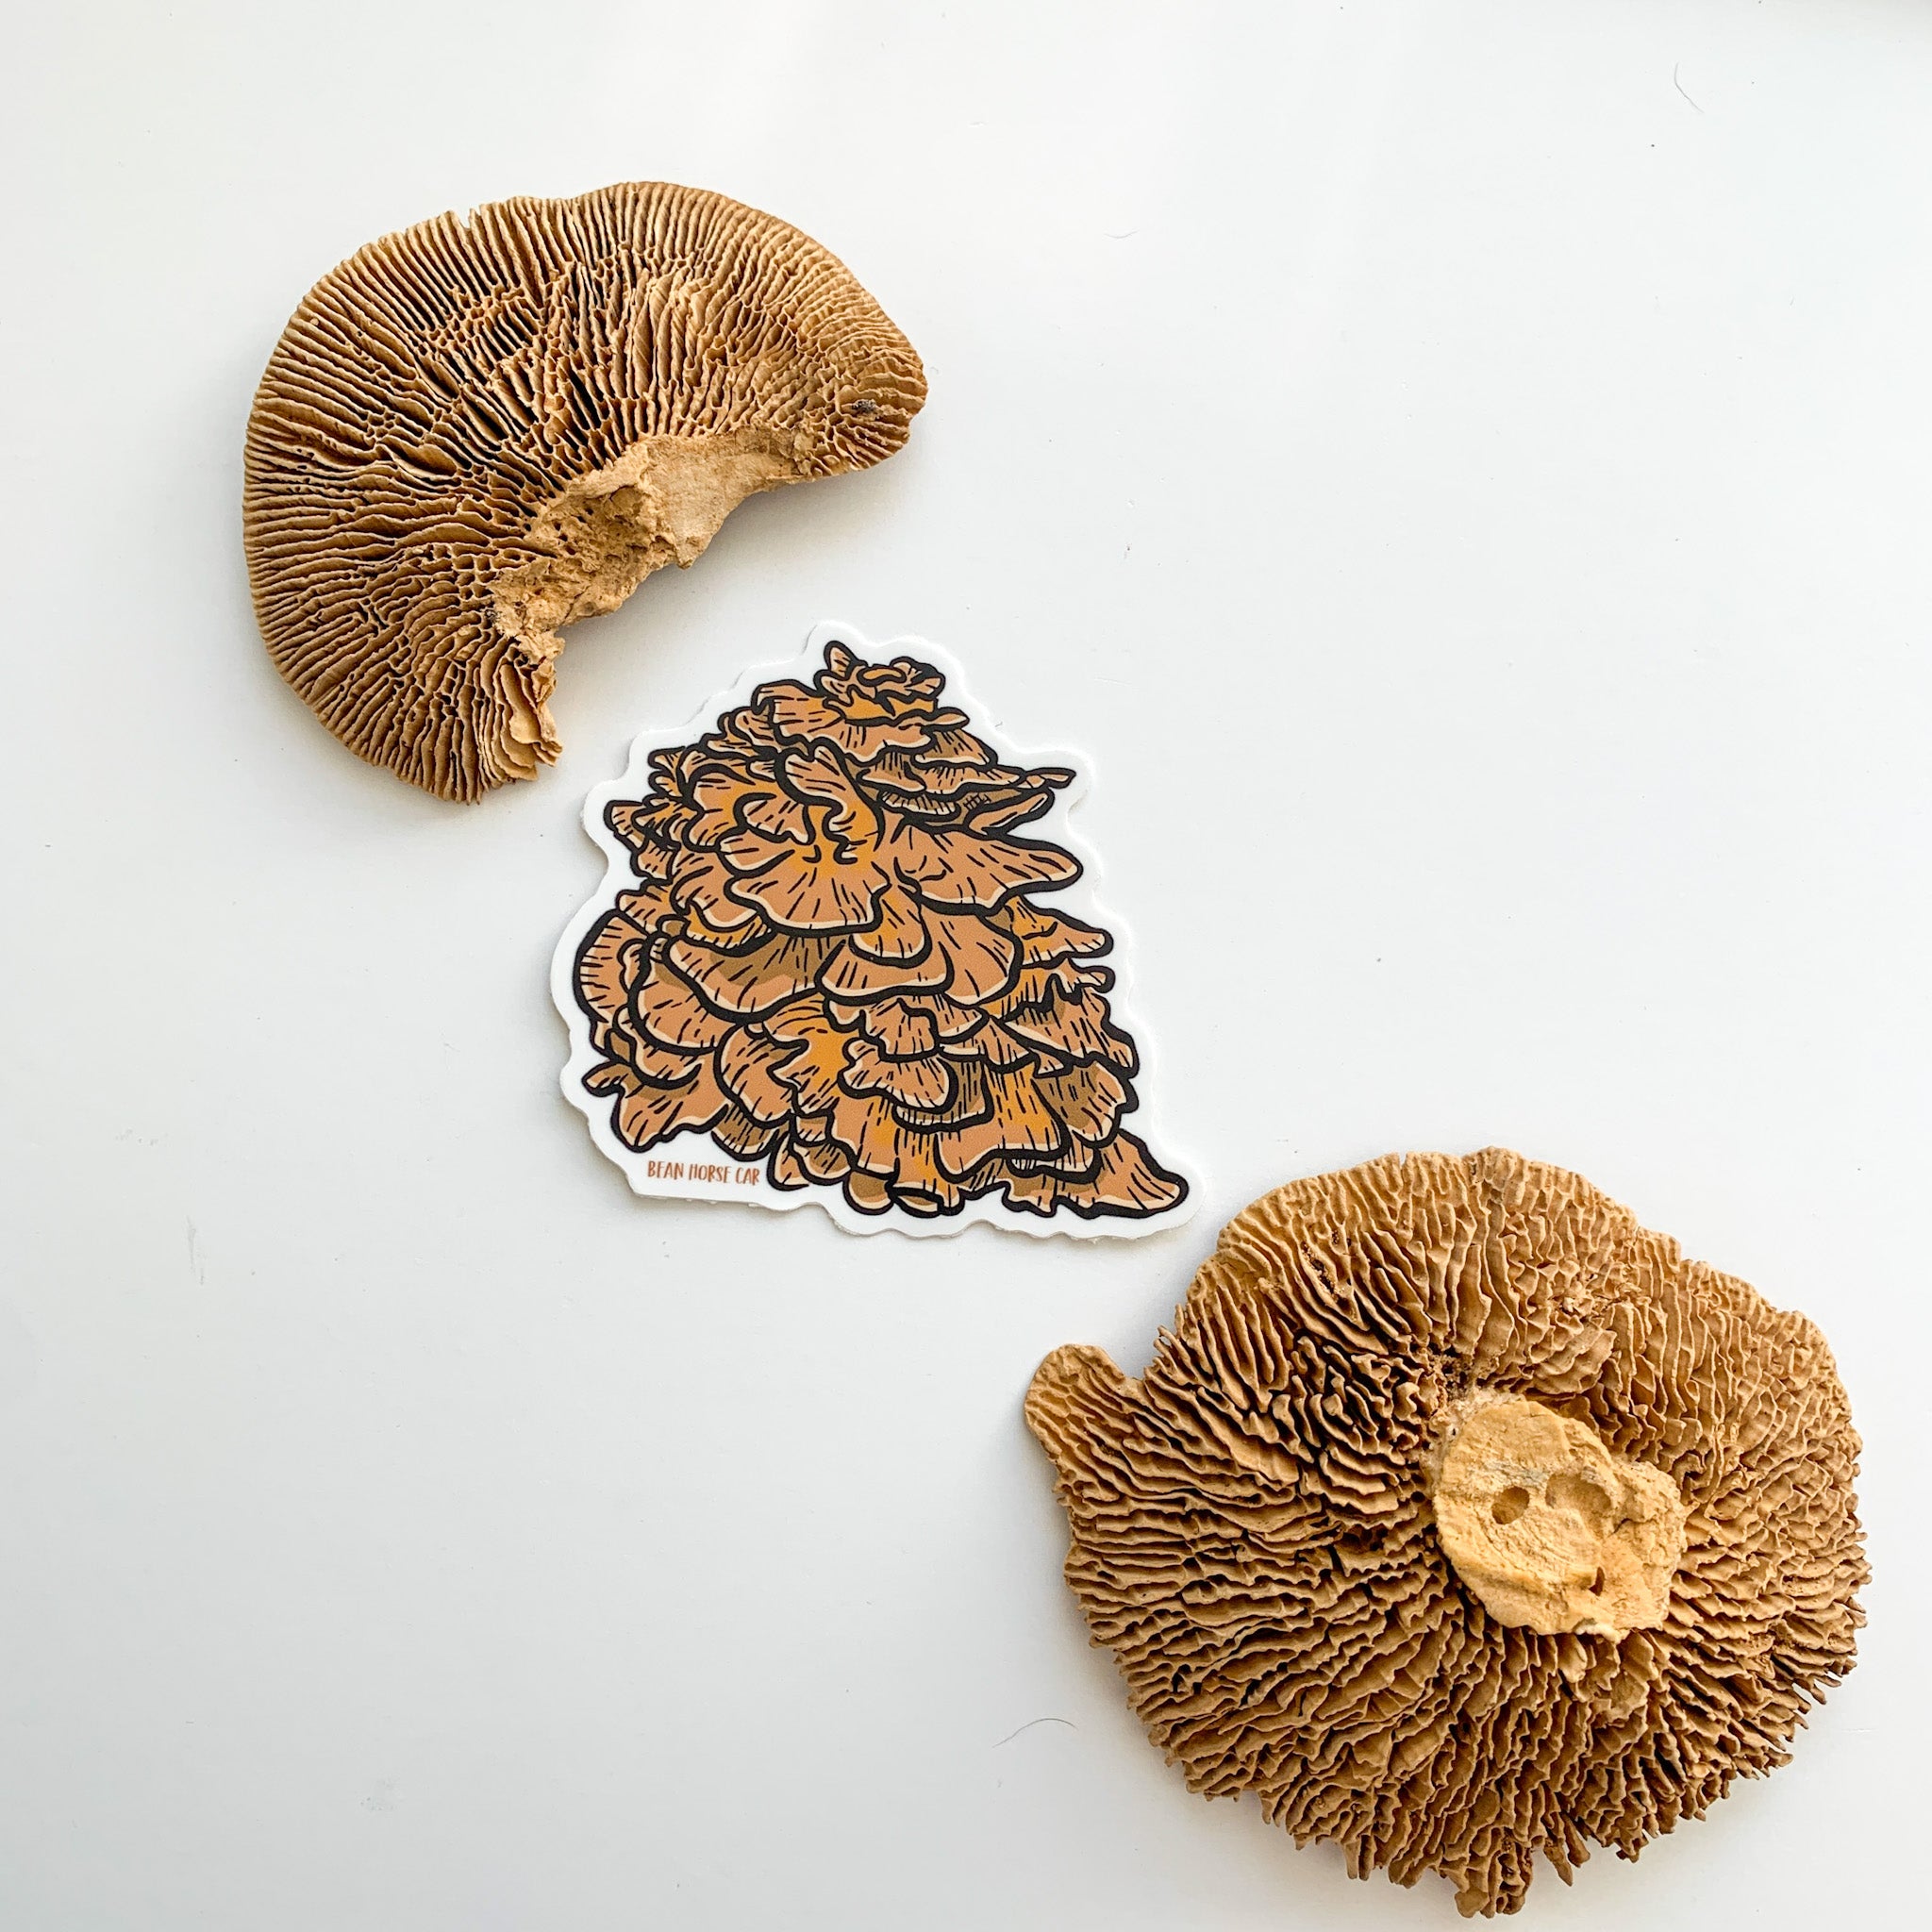 Hen of the Woods Mushroom Sticker